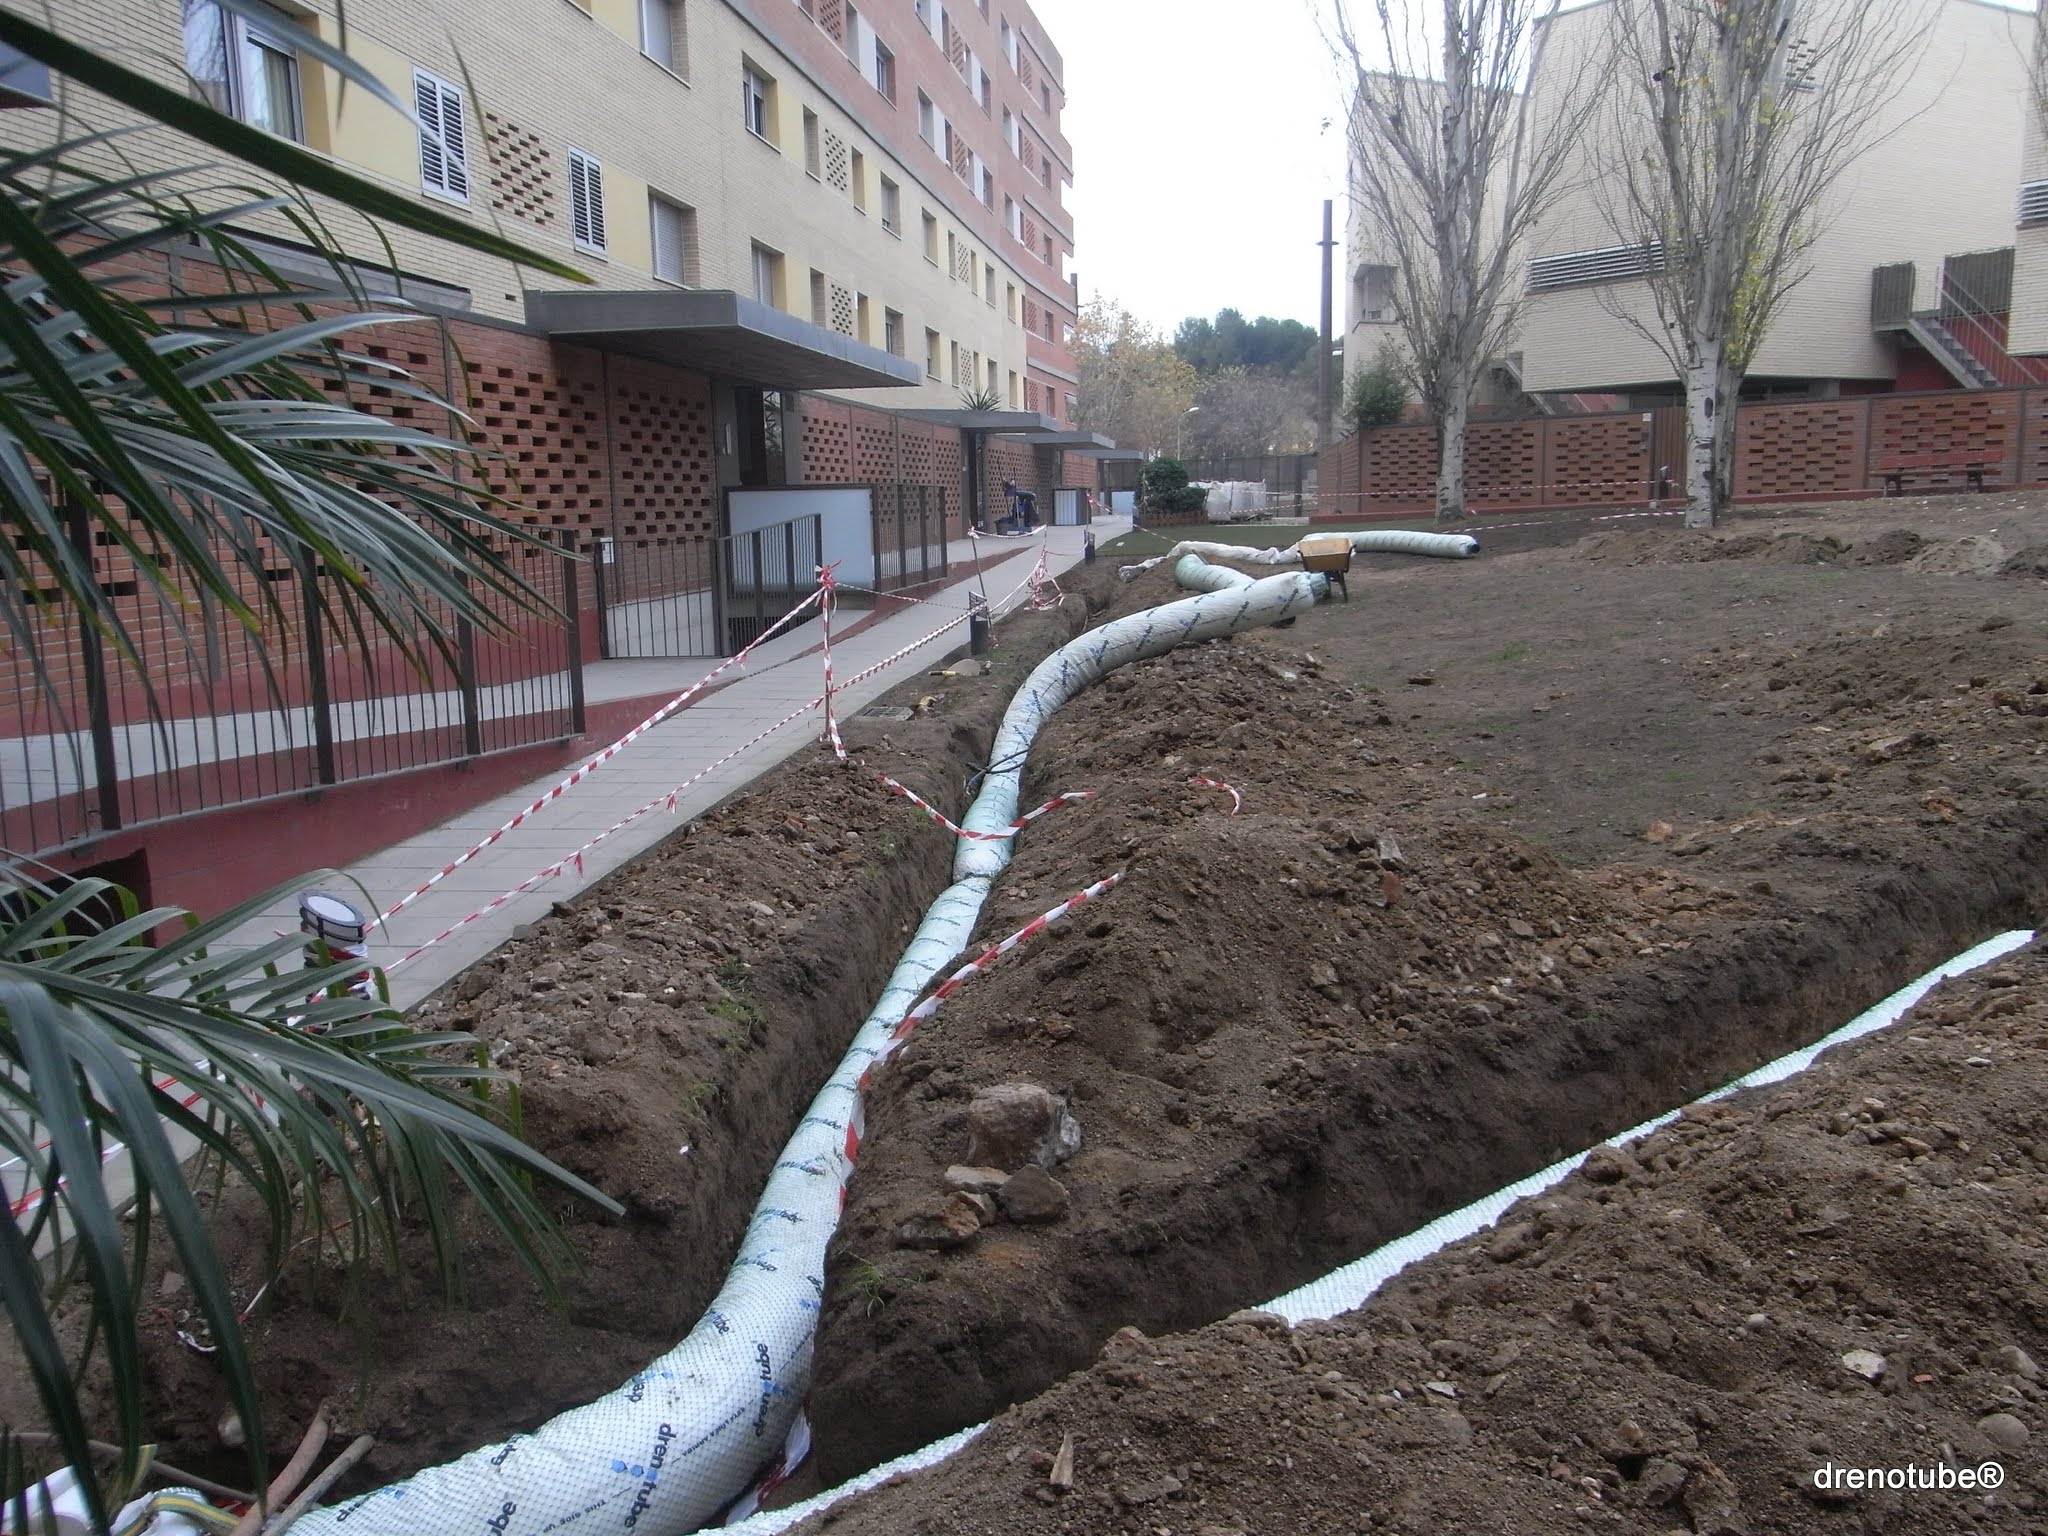 Sistema de drenaje drenotube® en un jardín – Barcelona